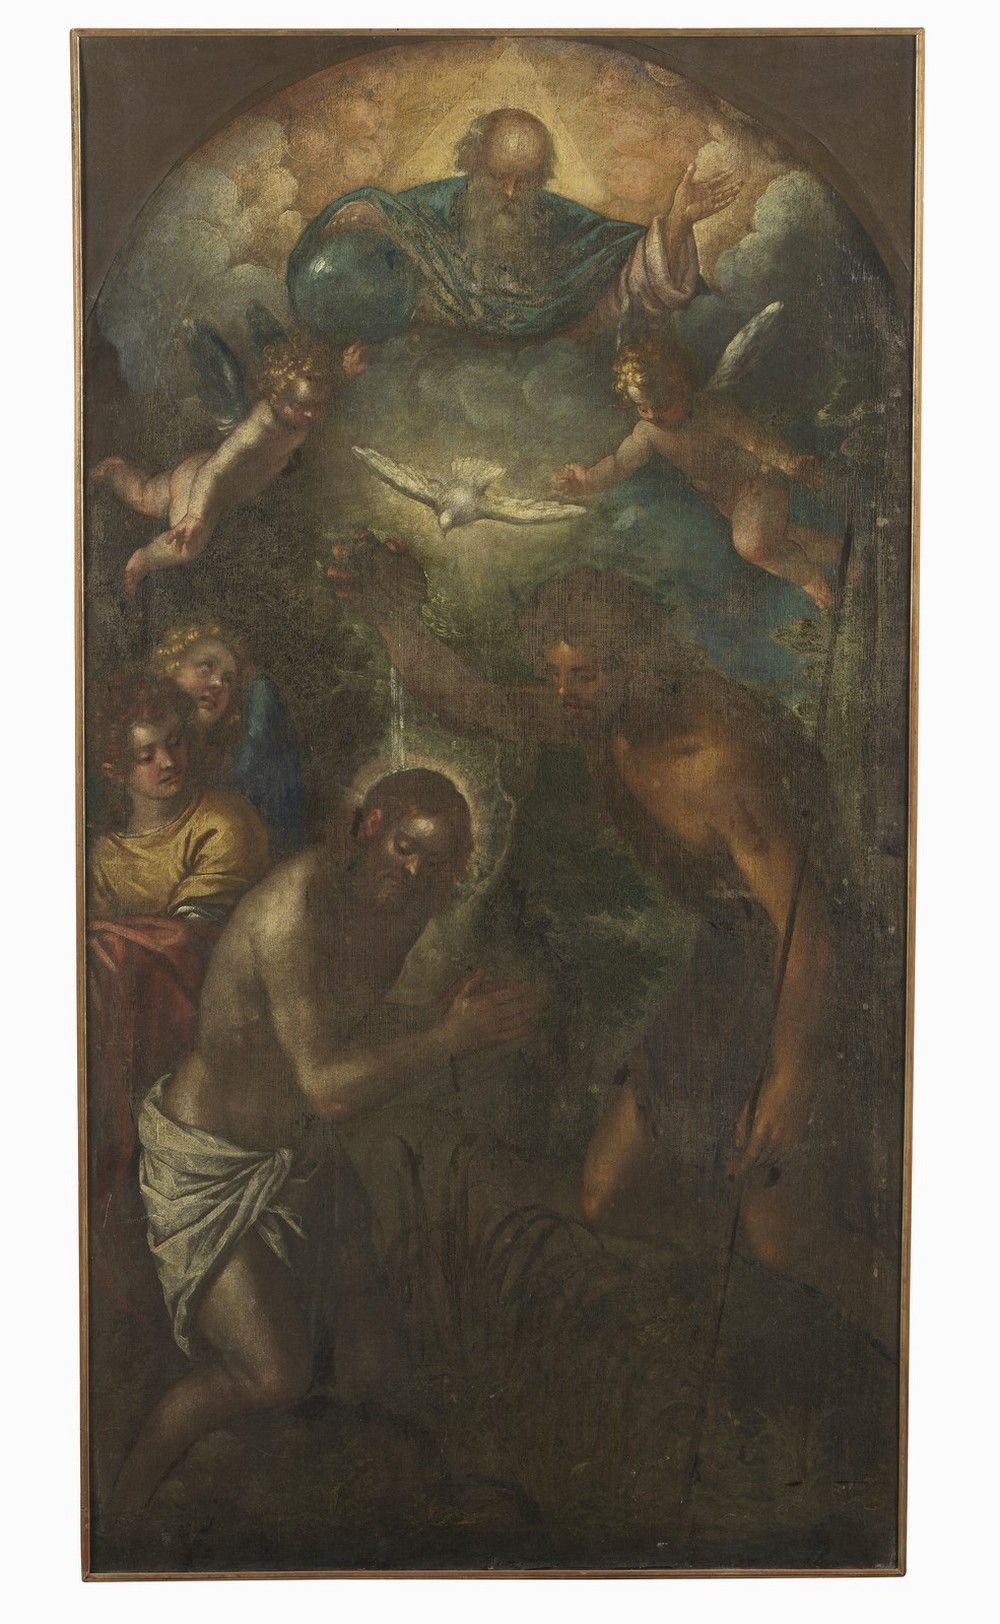 ARTISTA VENETO DEL XVI SECOLO Baptism of Christ. 16TH CENTURY VENETO ARTIST Bapt&hellip;